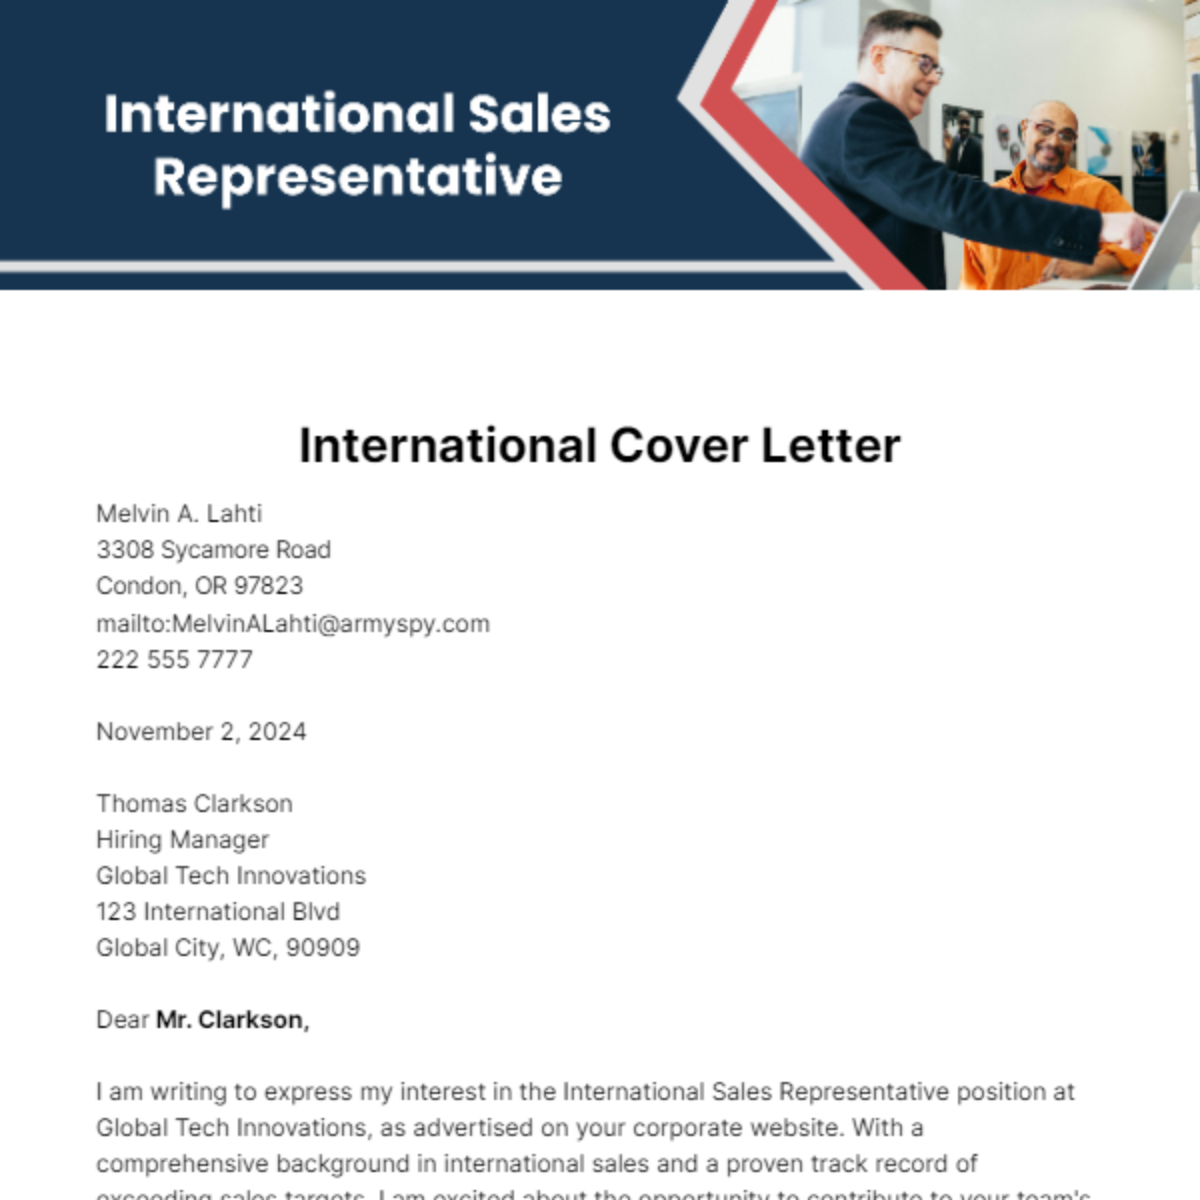 International Cover Letter Template